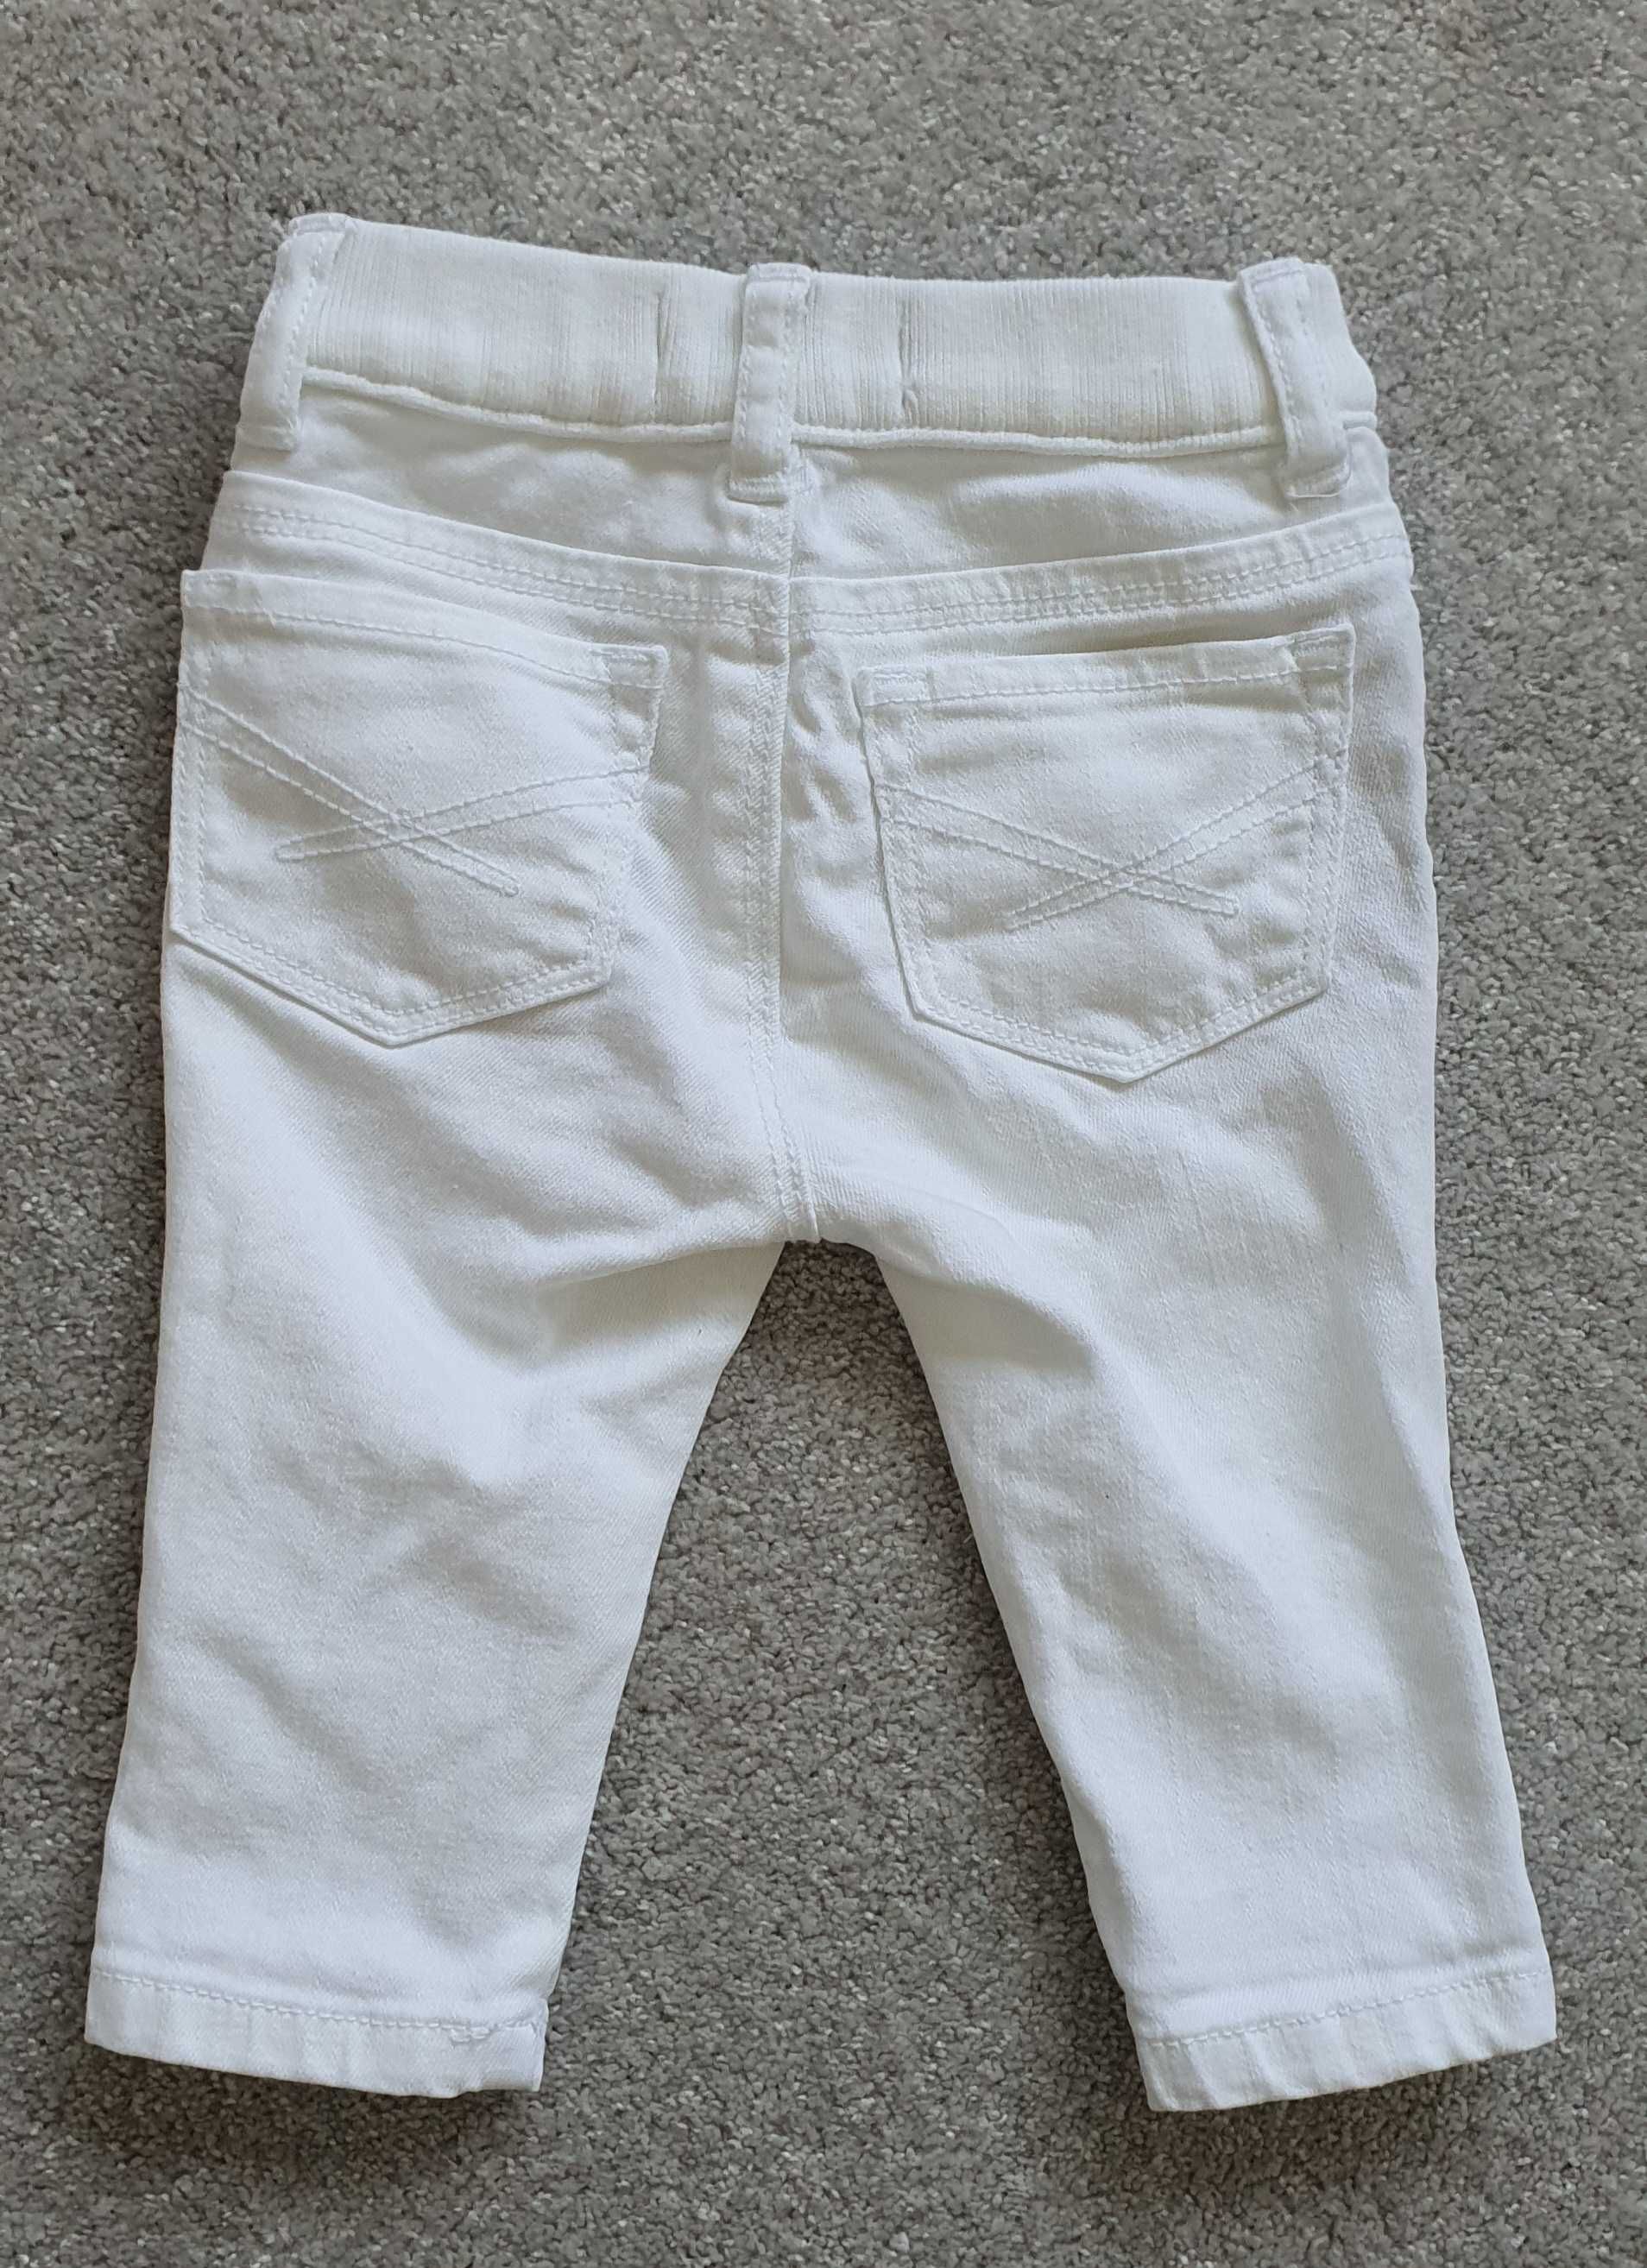 Pantaloni lungi albi GAP, pt fetite, 62-68 cm, noi fara eticheta